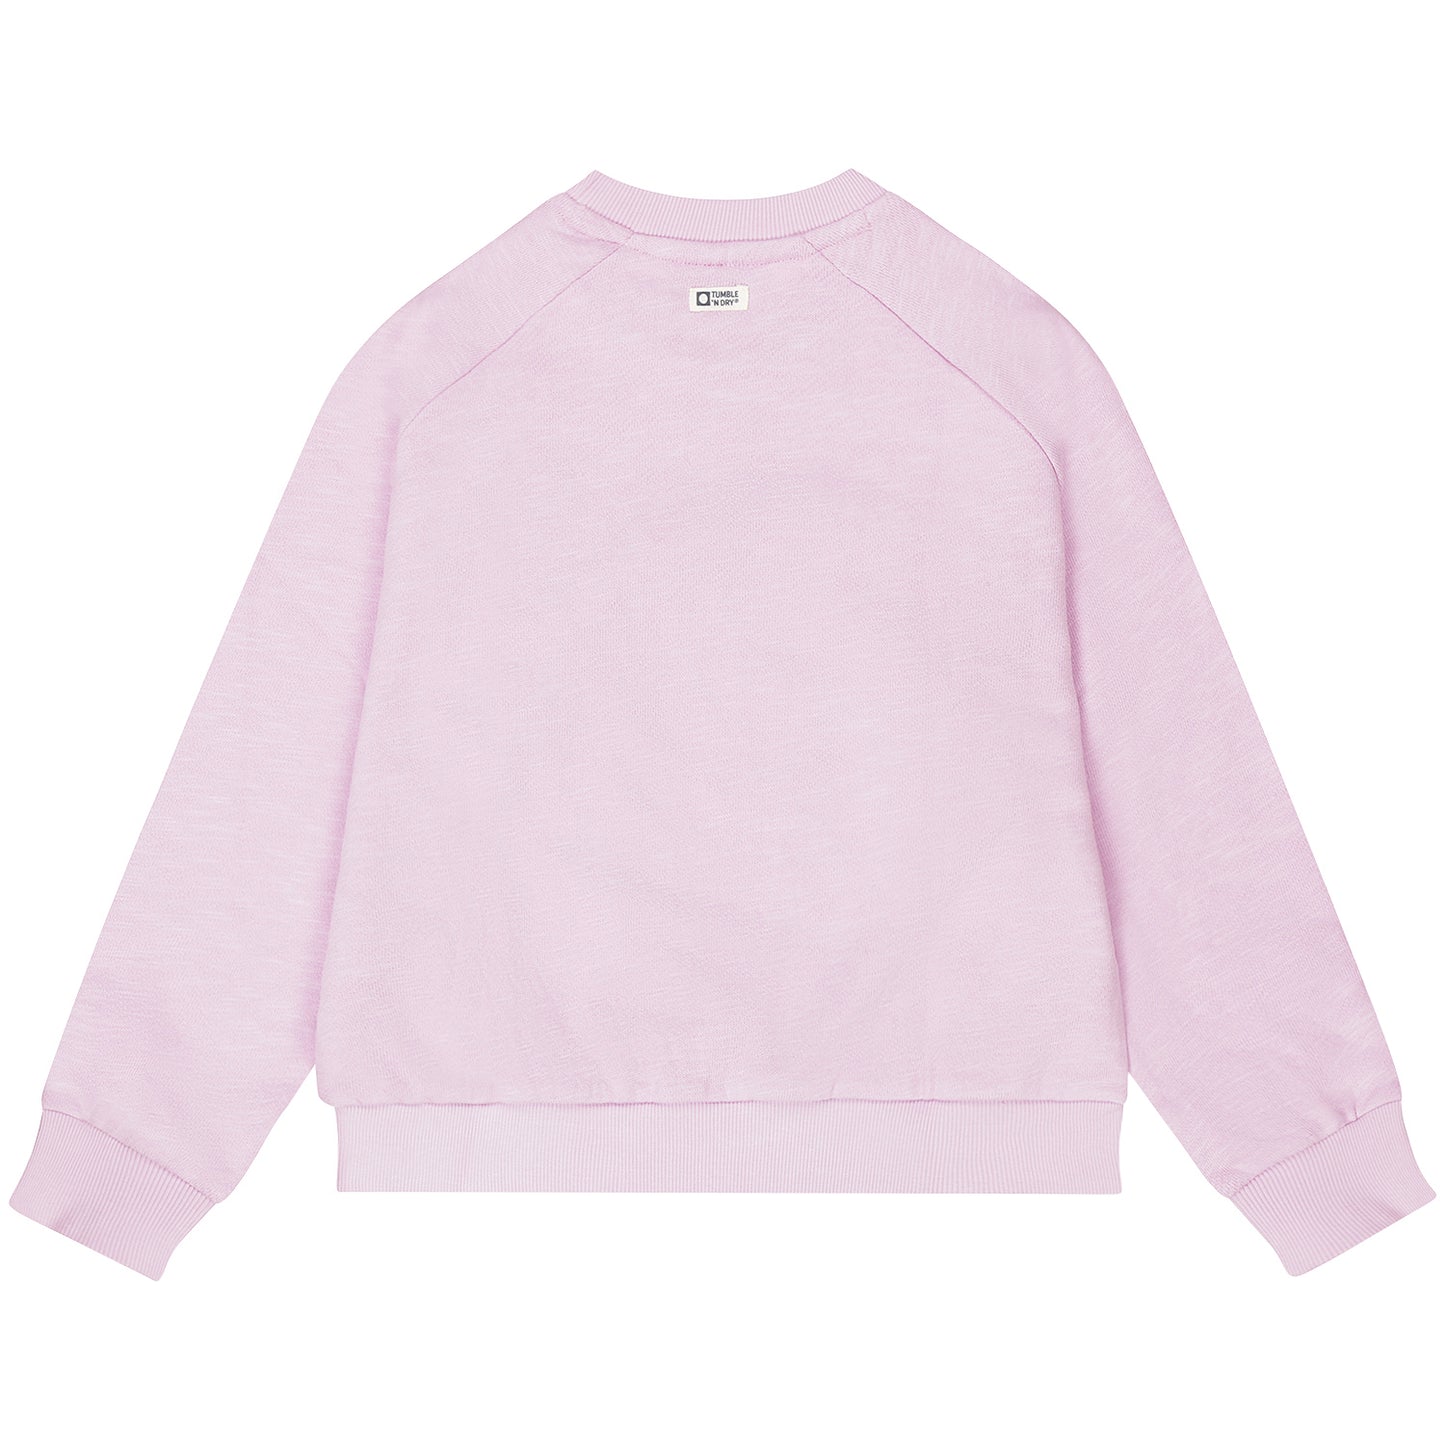 || Tumble ‘N Dry || Sweater borduursel - Giulia